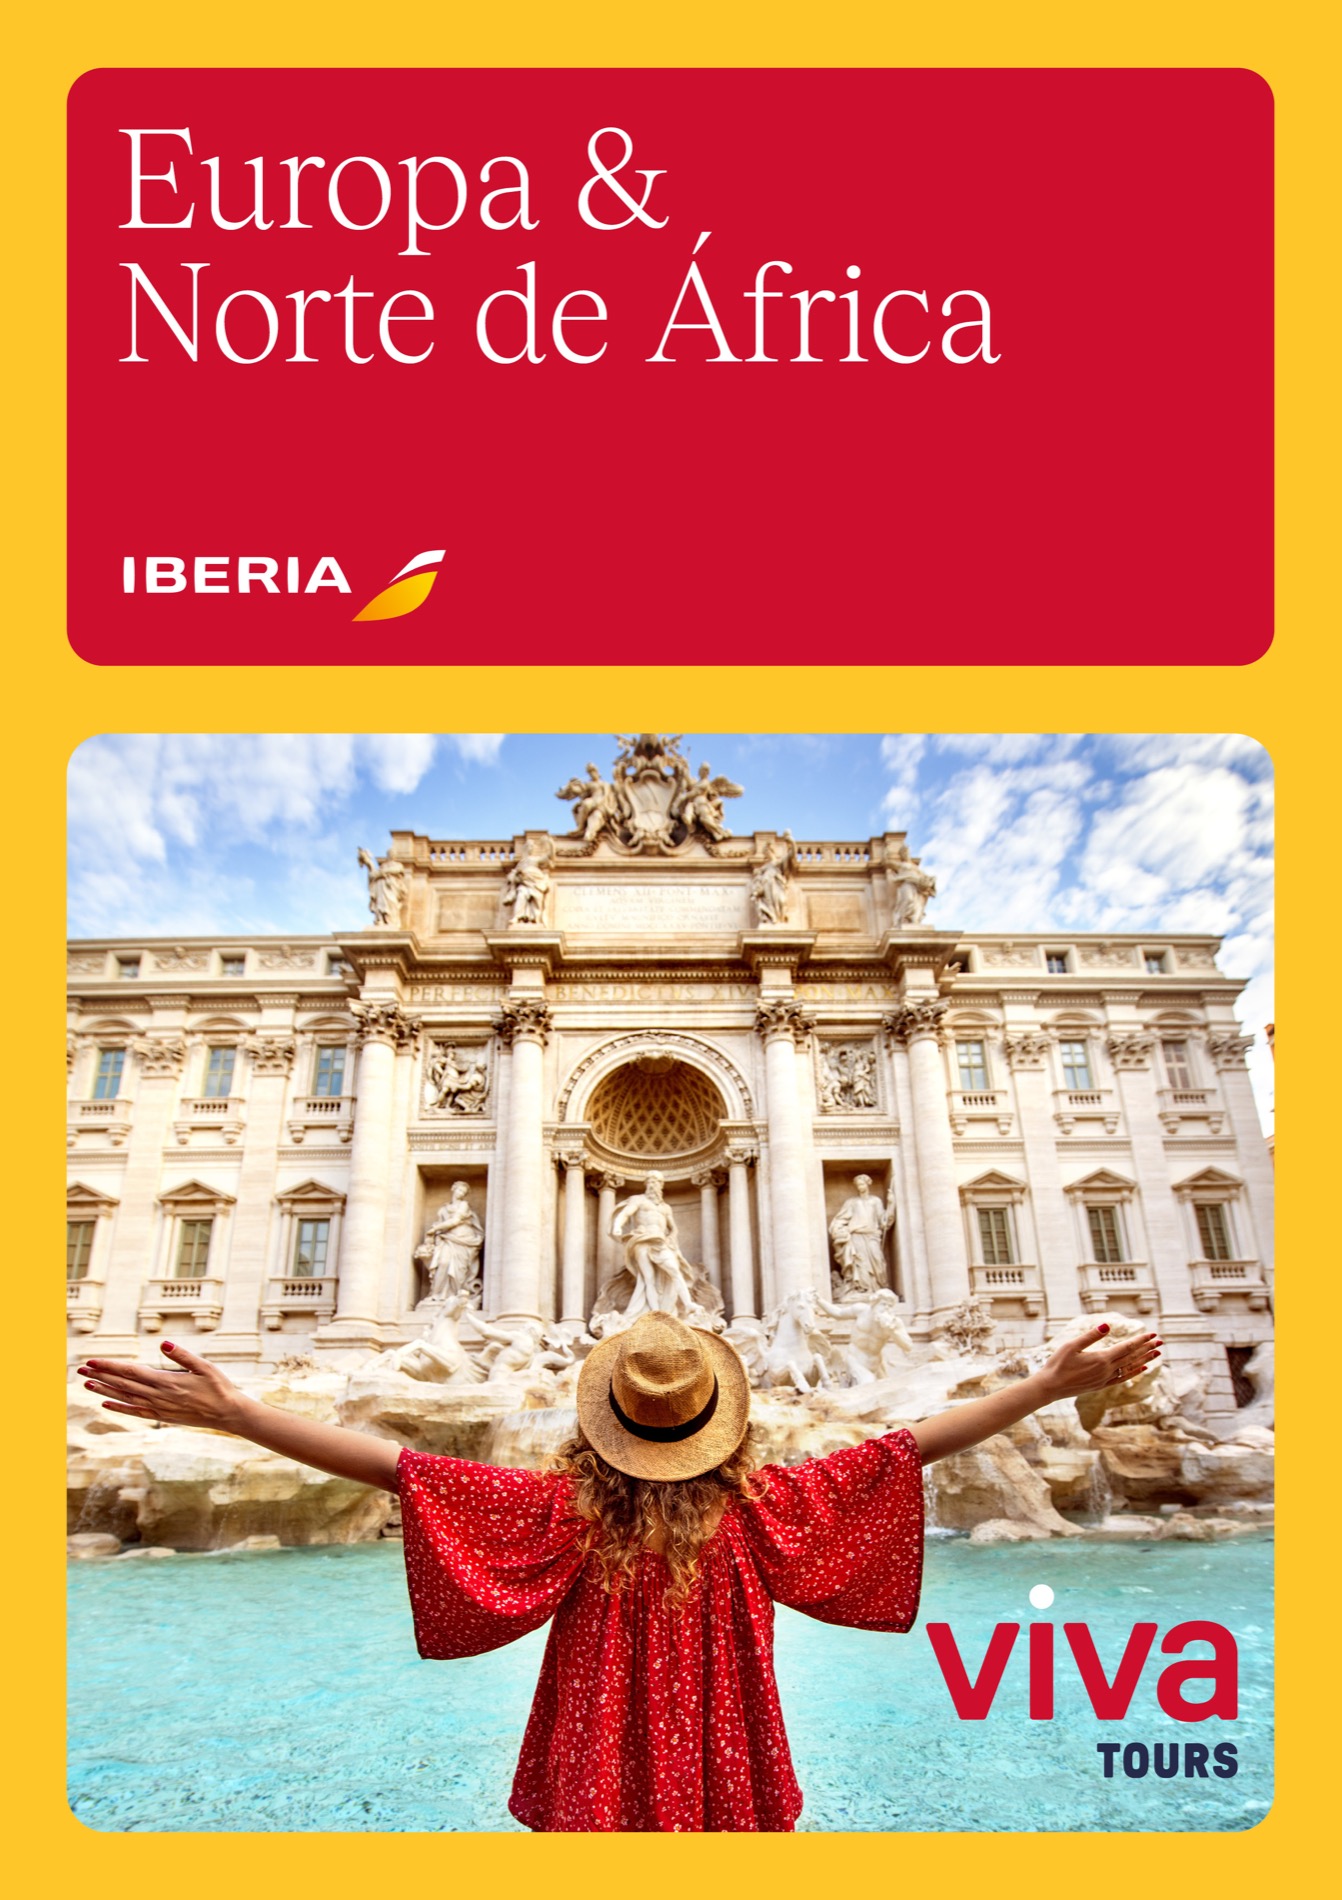 EMagazines Portfolio. Viva Tours & Iberia